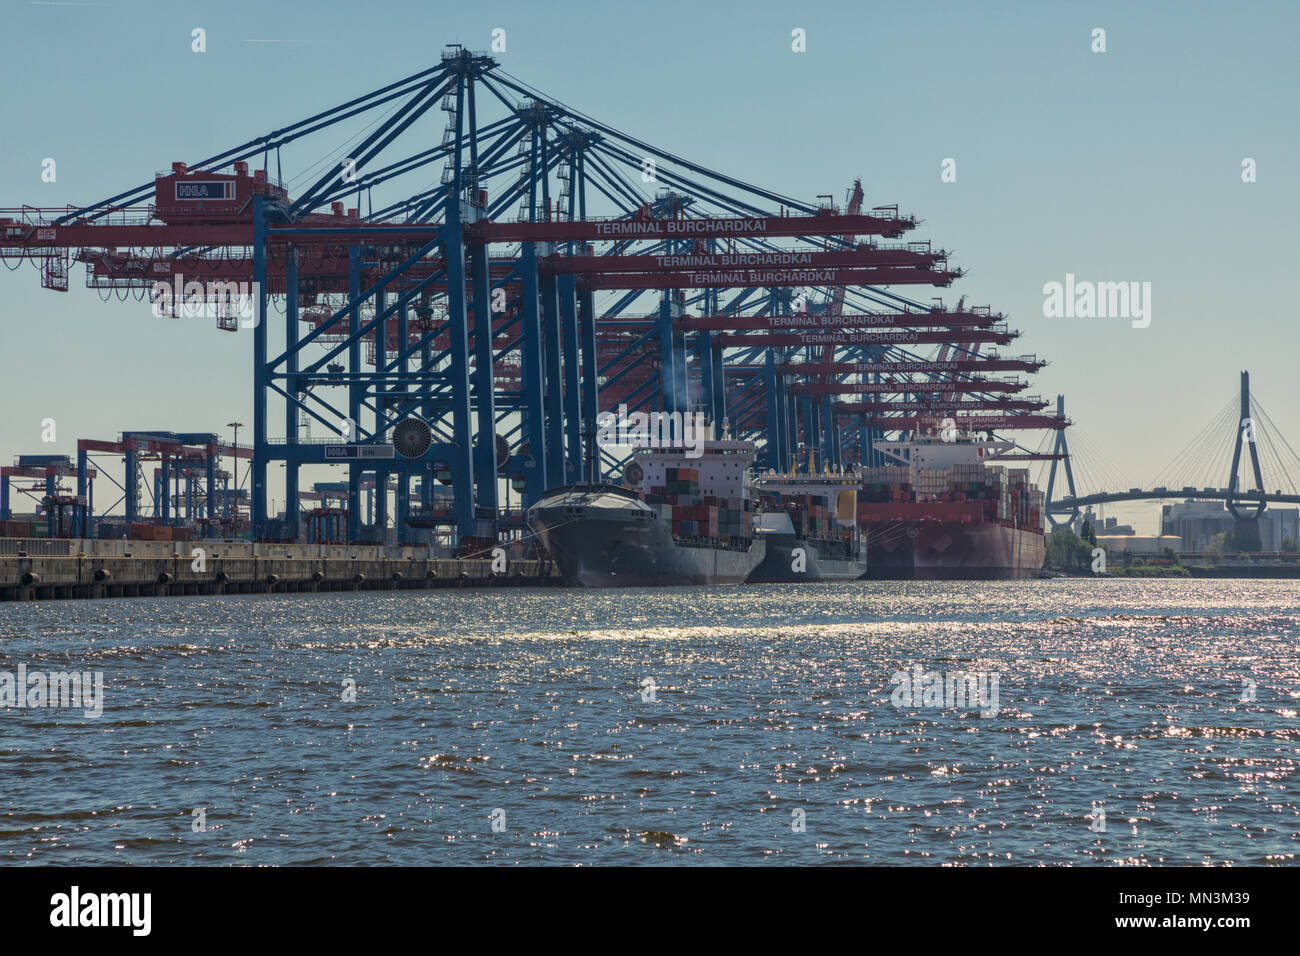 Container ships moored at Terminal Burchardkai  at the port of Hamburg. Köhlbrandbrücke bridge in background Stock Photo